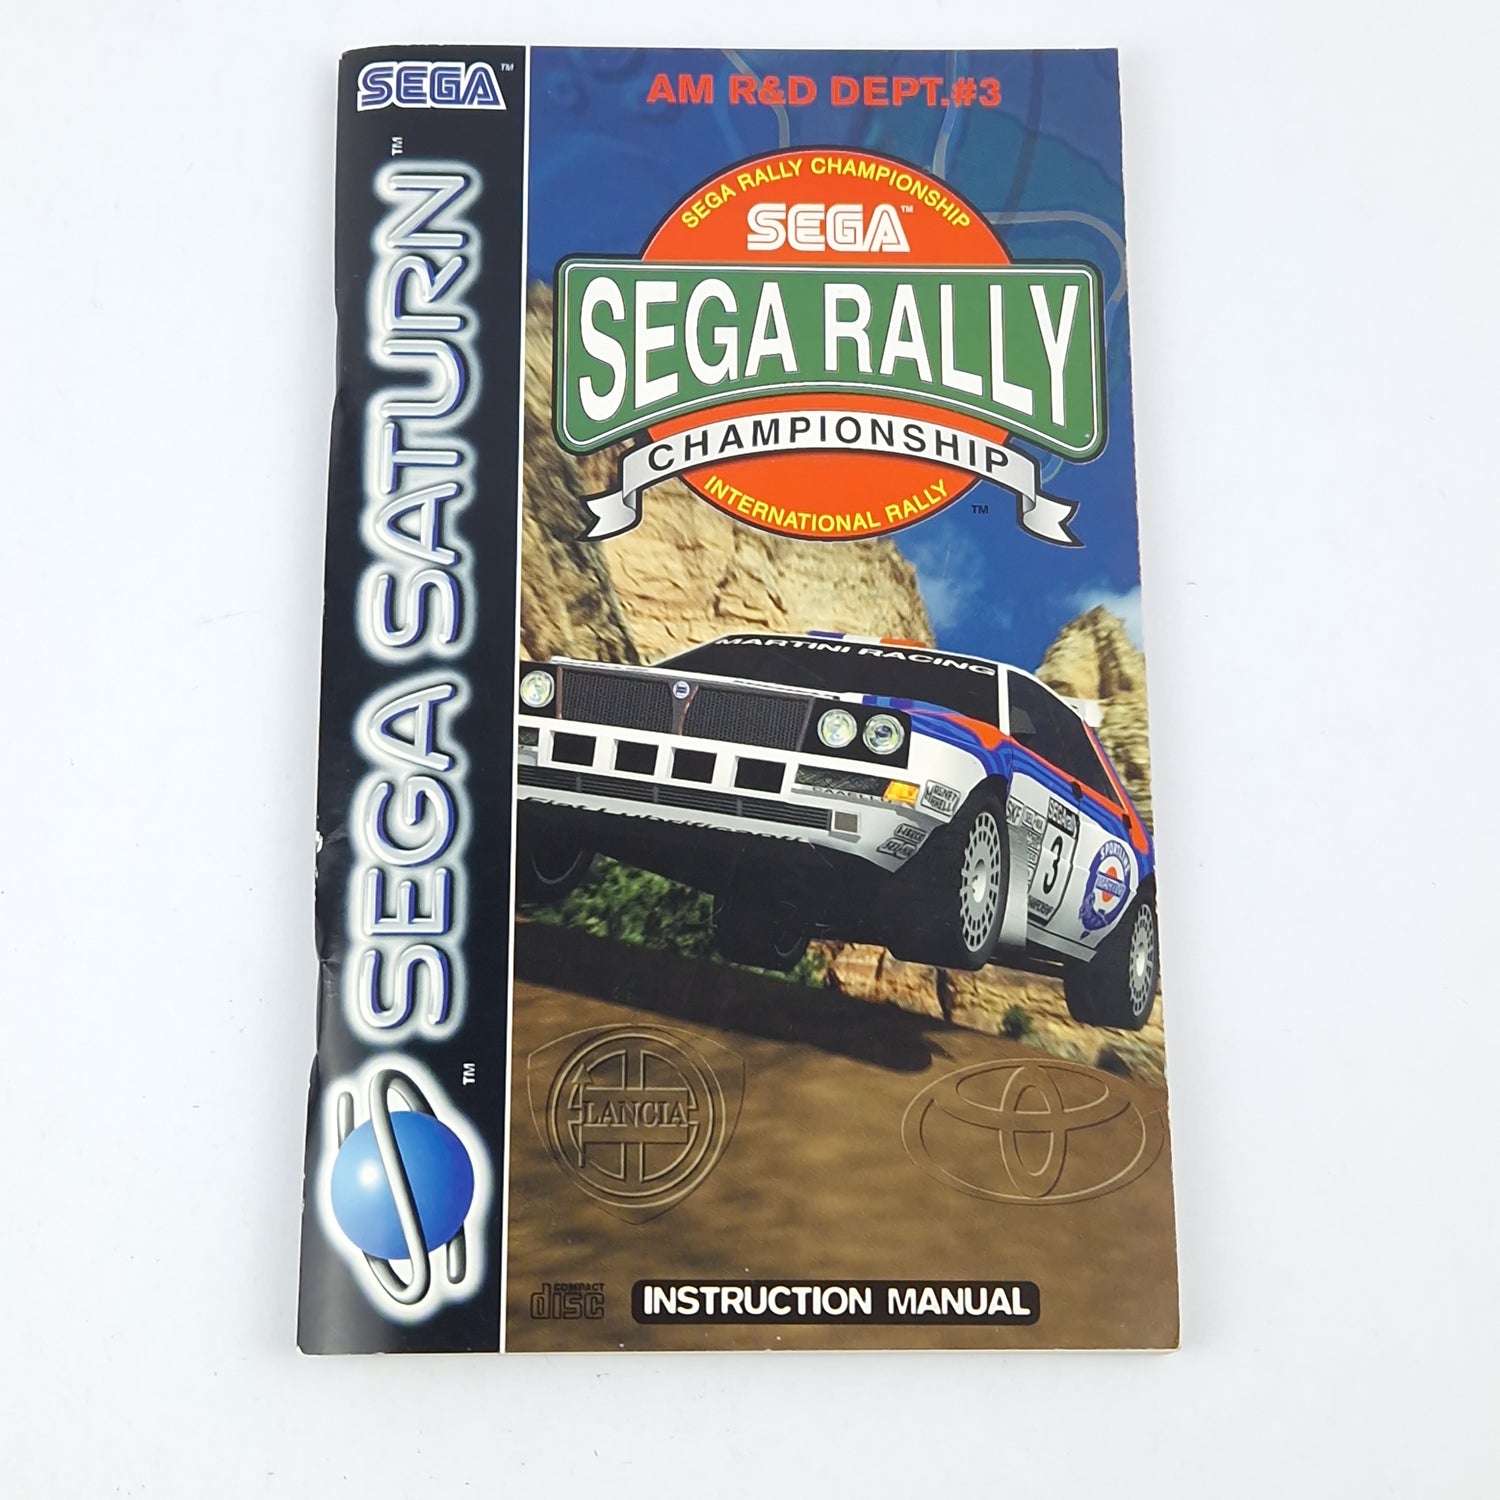 Sega Saturn Game: Sega Rally Championship - CD Instructions OVP / PAL Disc